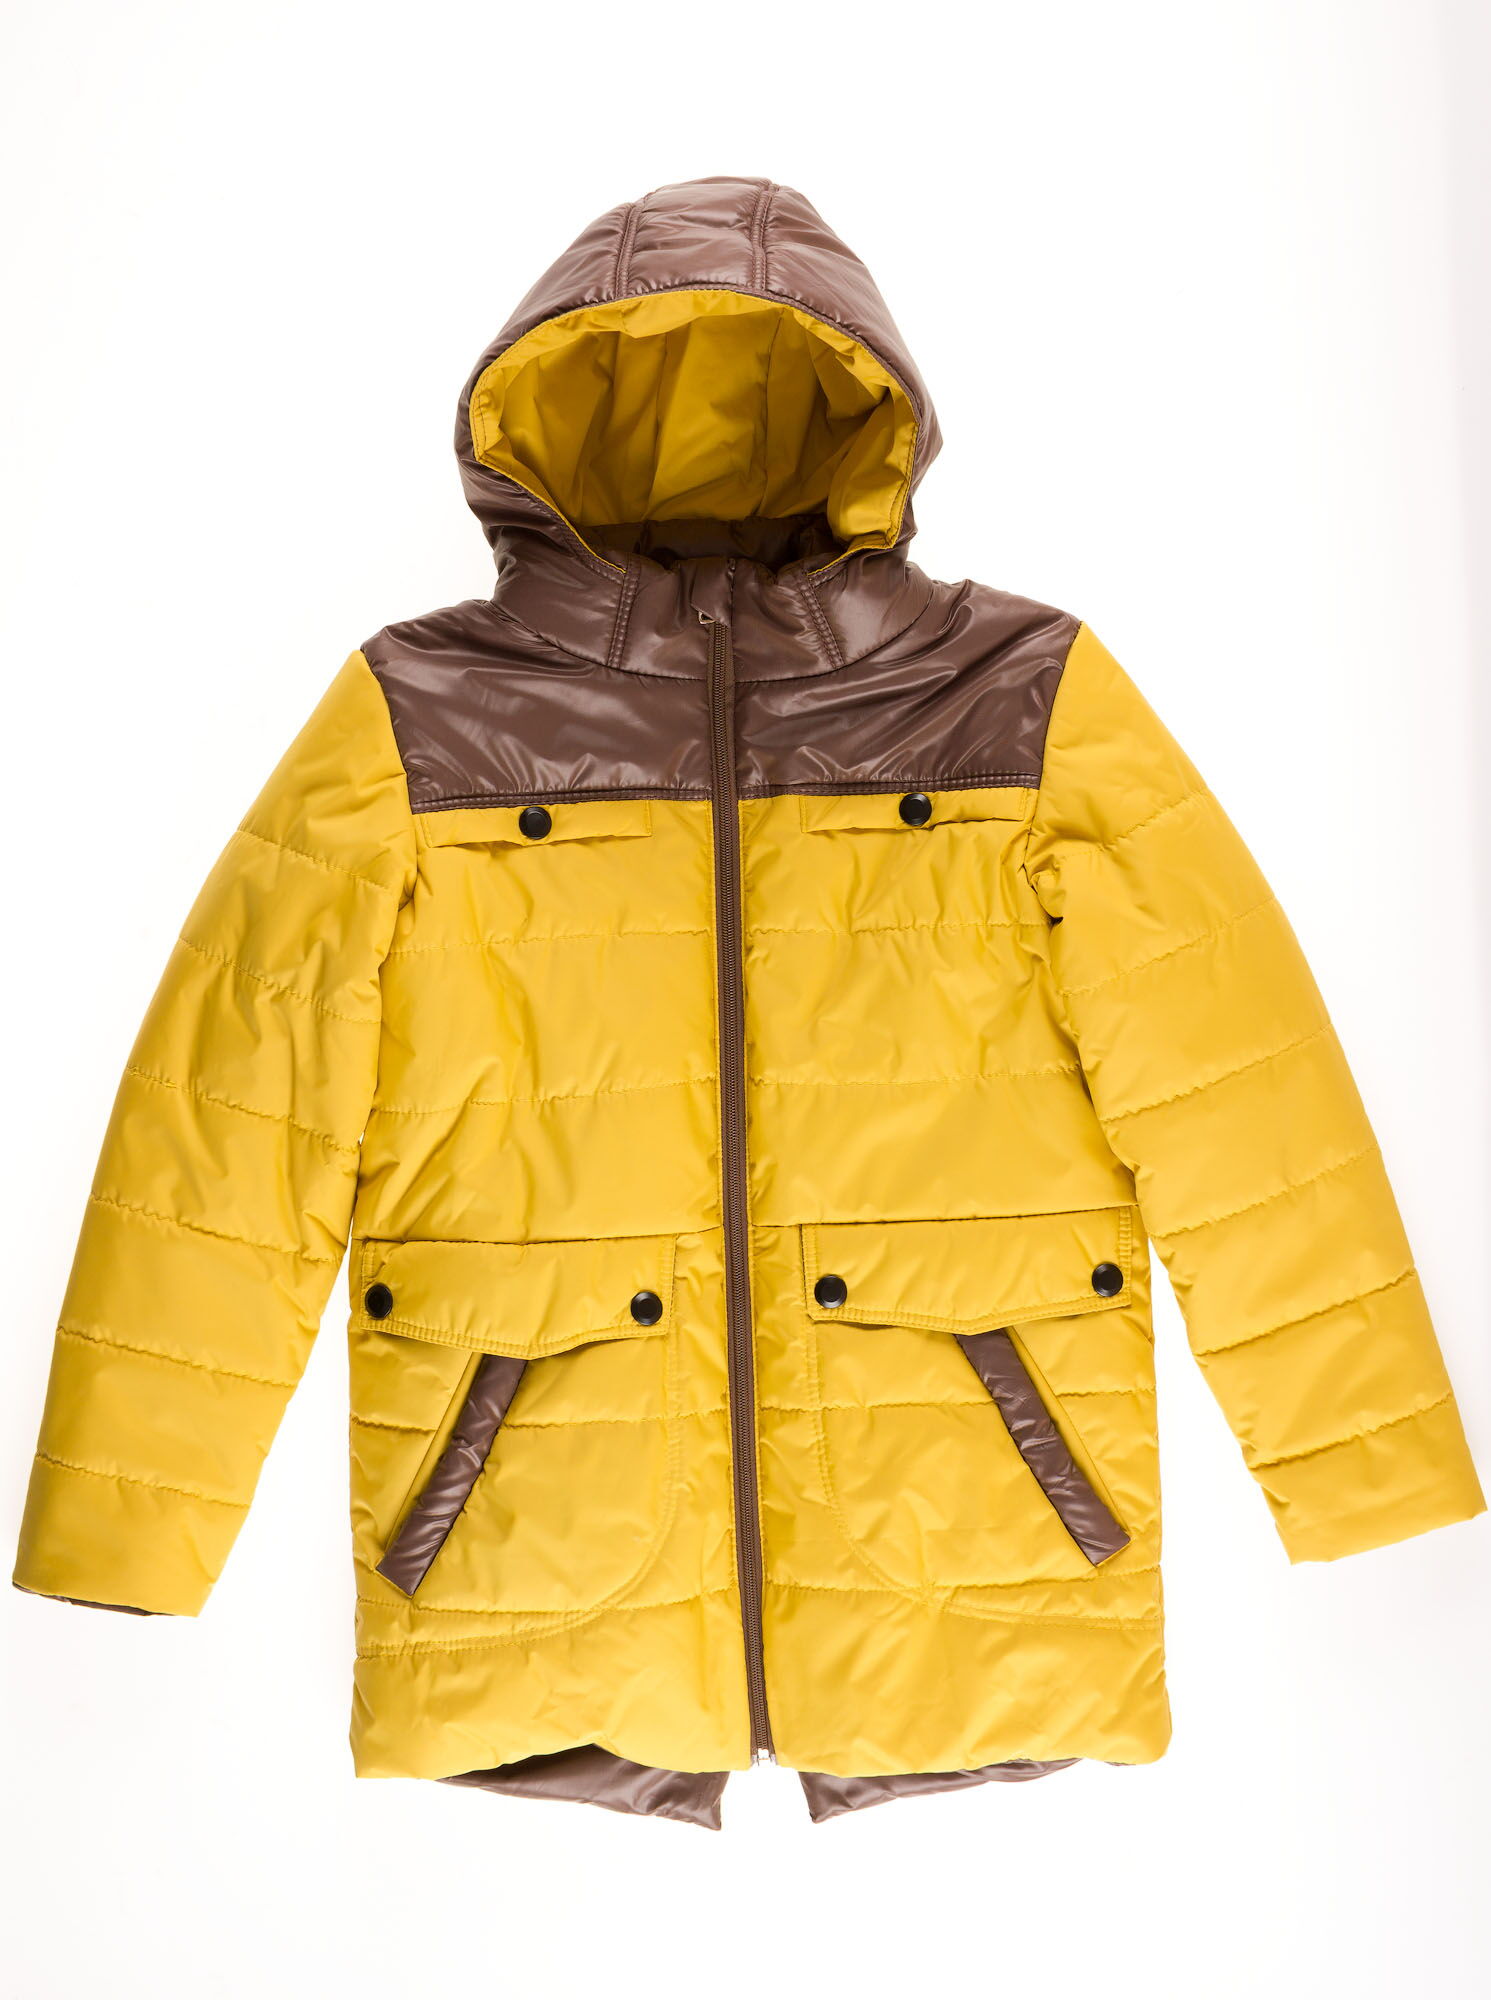 Куртка для мальчика ОДЯГАЙКО желтая 22159О - цена